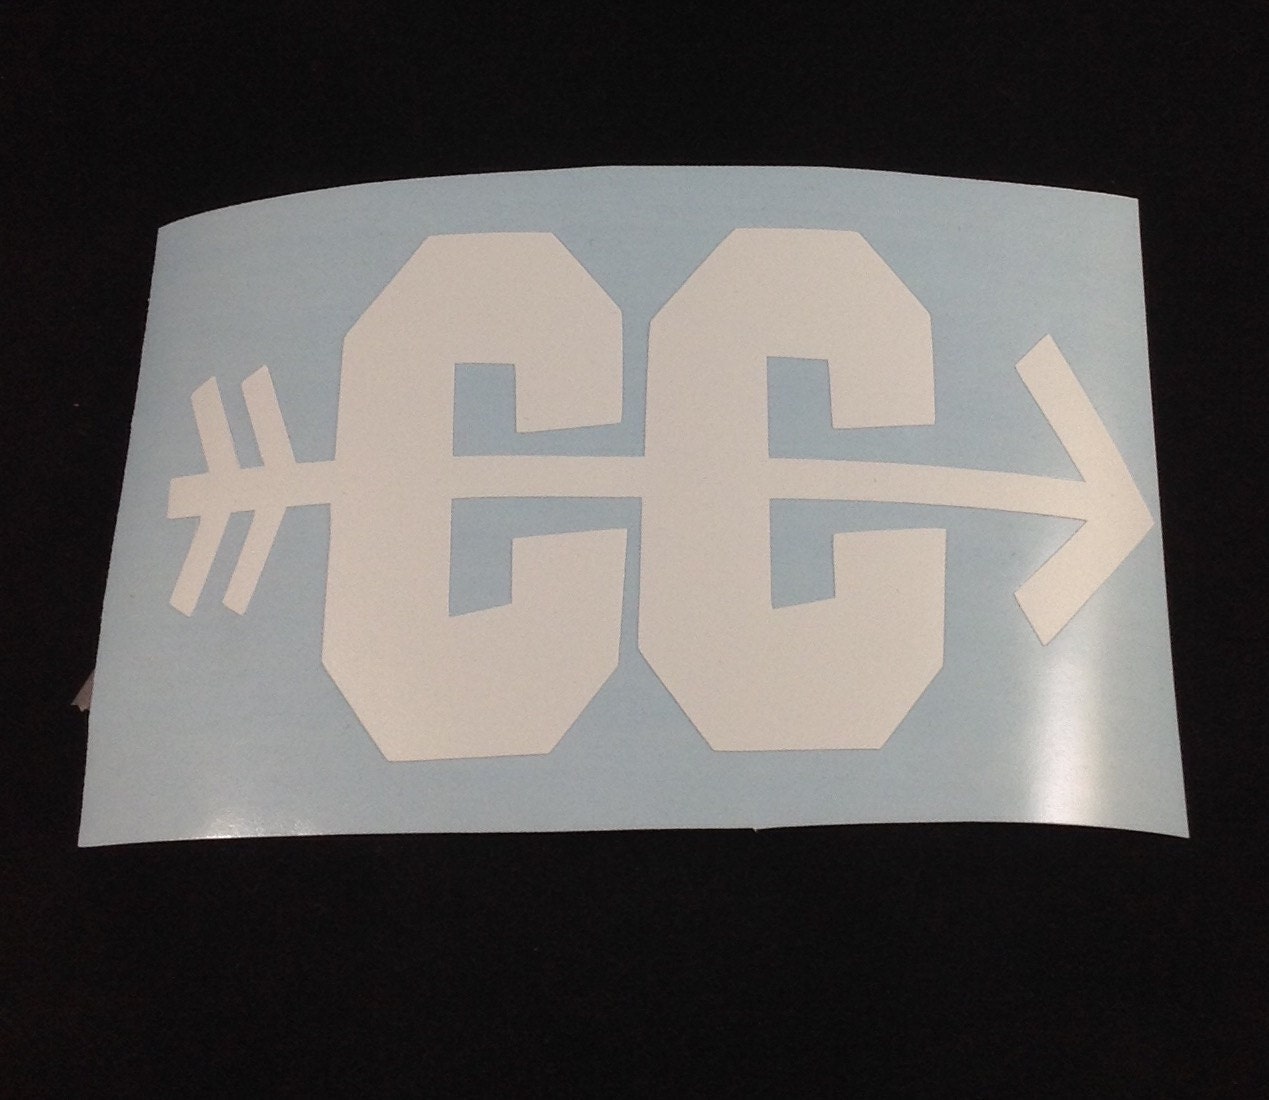 Cross Country Xc Symbol 4 Inch Vinyl Decal Window Sticker